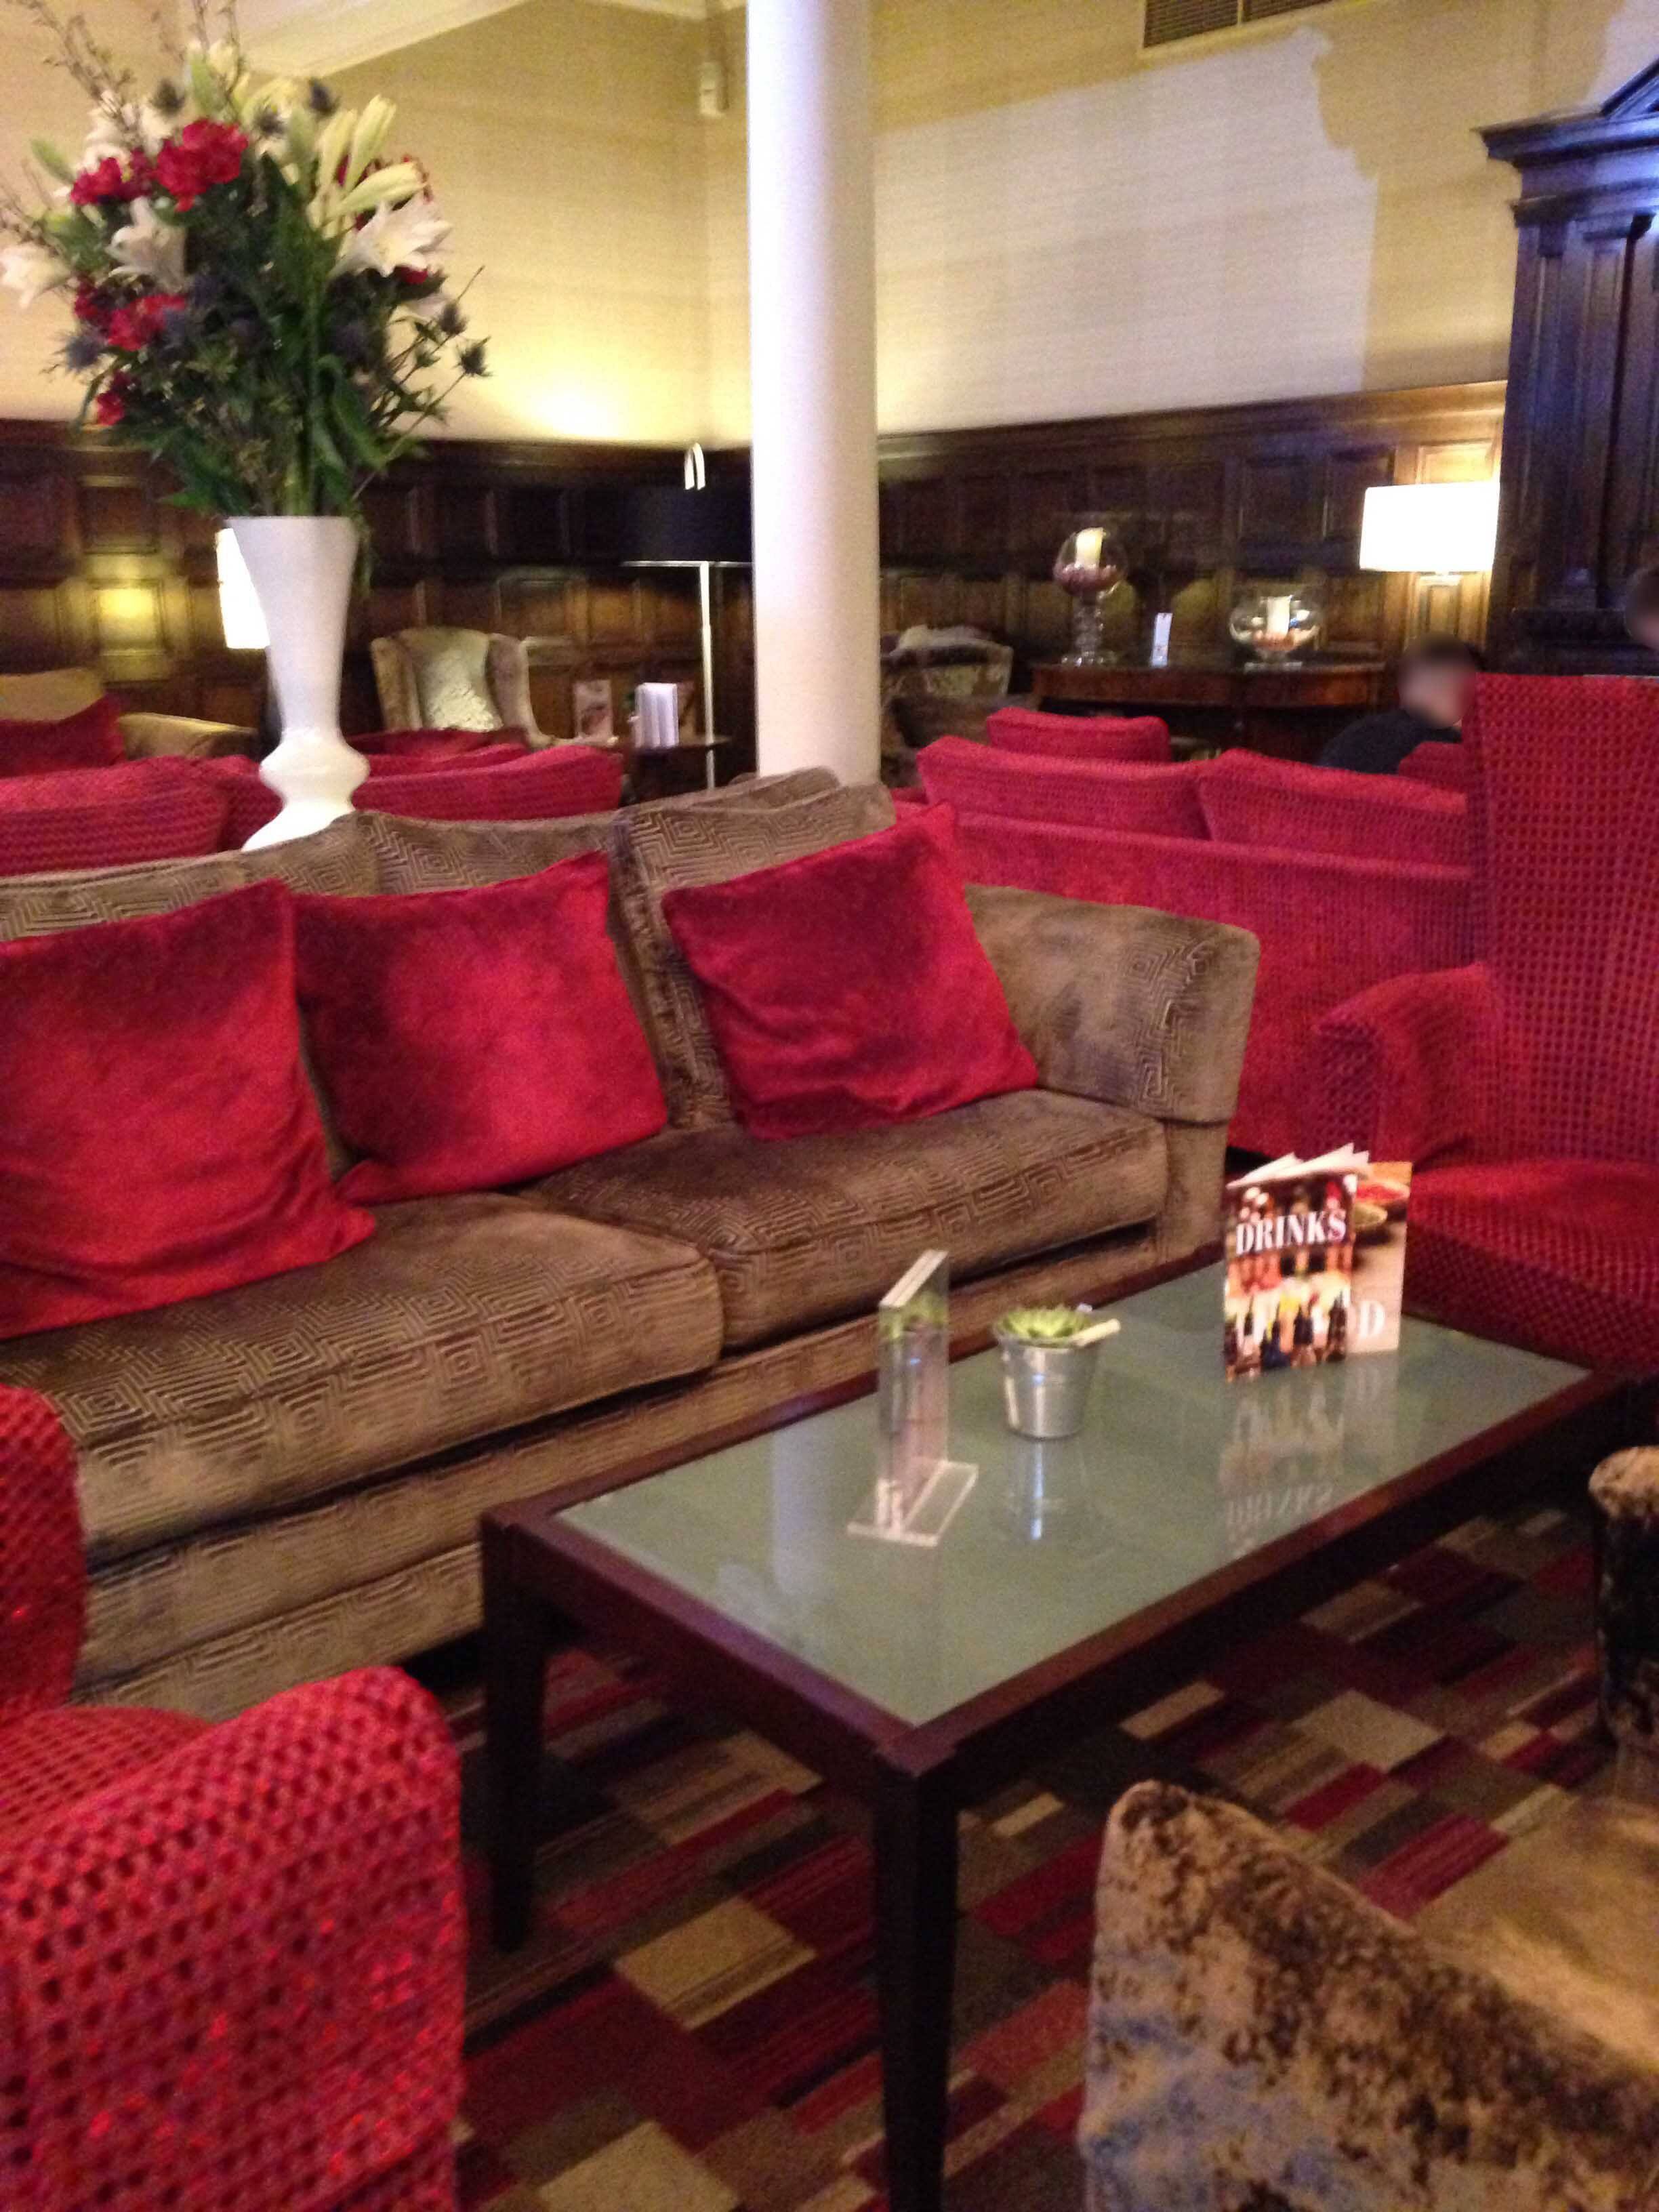 1606 Lounge Bar - The Rembrandt Hotel | The Rembrandt Hotel, 11 Thurloe Place, South Kensington, London SW7 2RS | +44 20 7589 8100